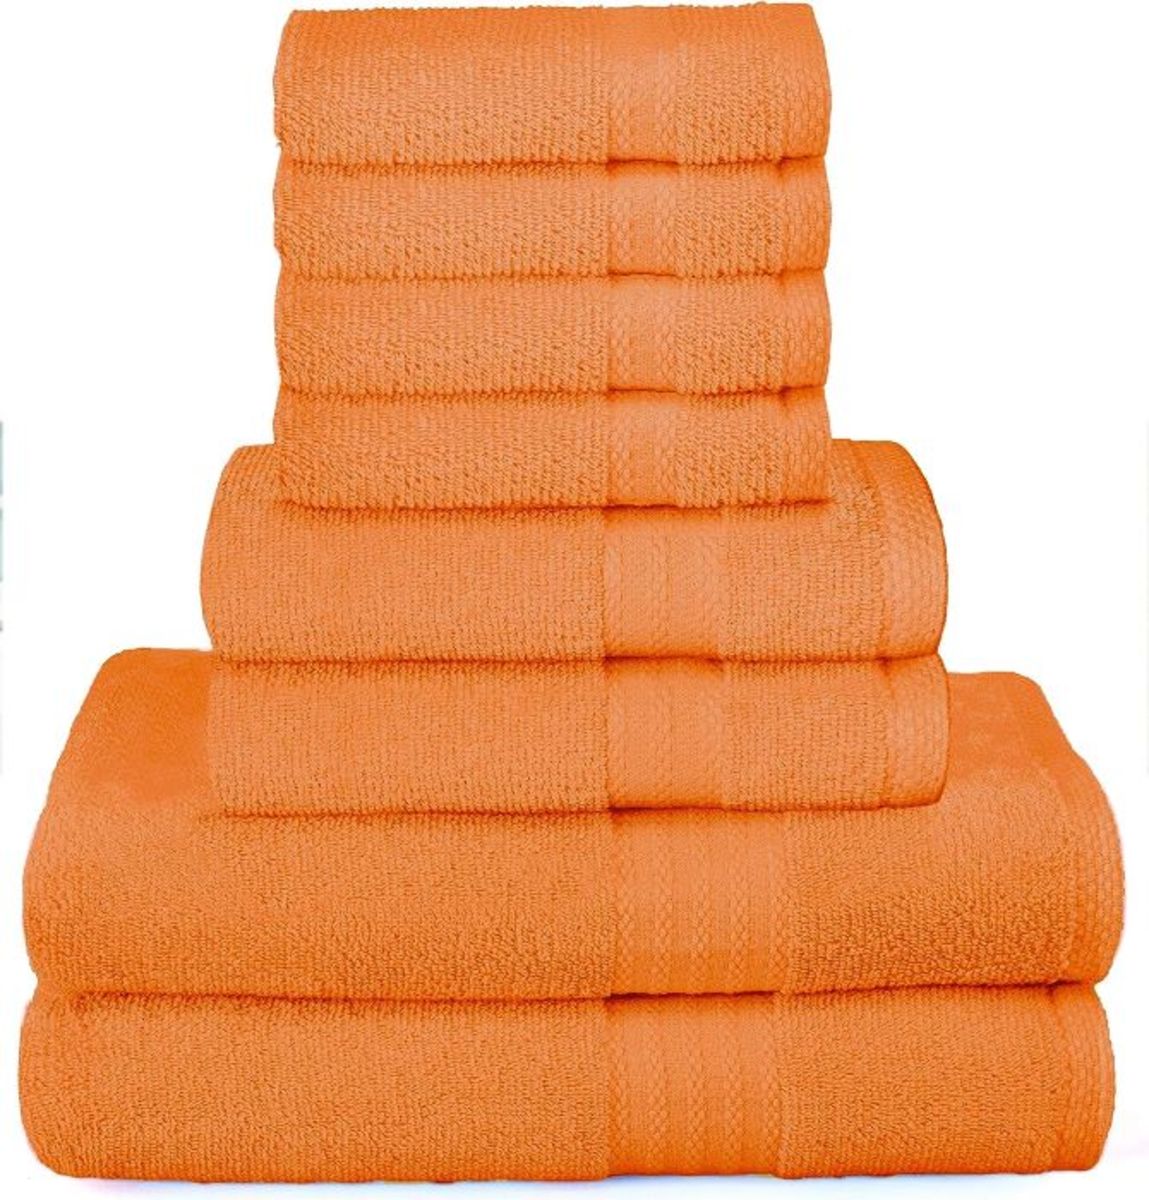 https://www.thestreet.com/.image/t_share/MjAwNDc1NDcwOTQ3NDI3NzA0/bath-towel-set-in-orange.jpg